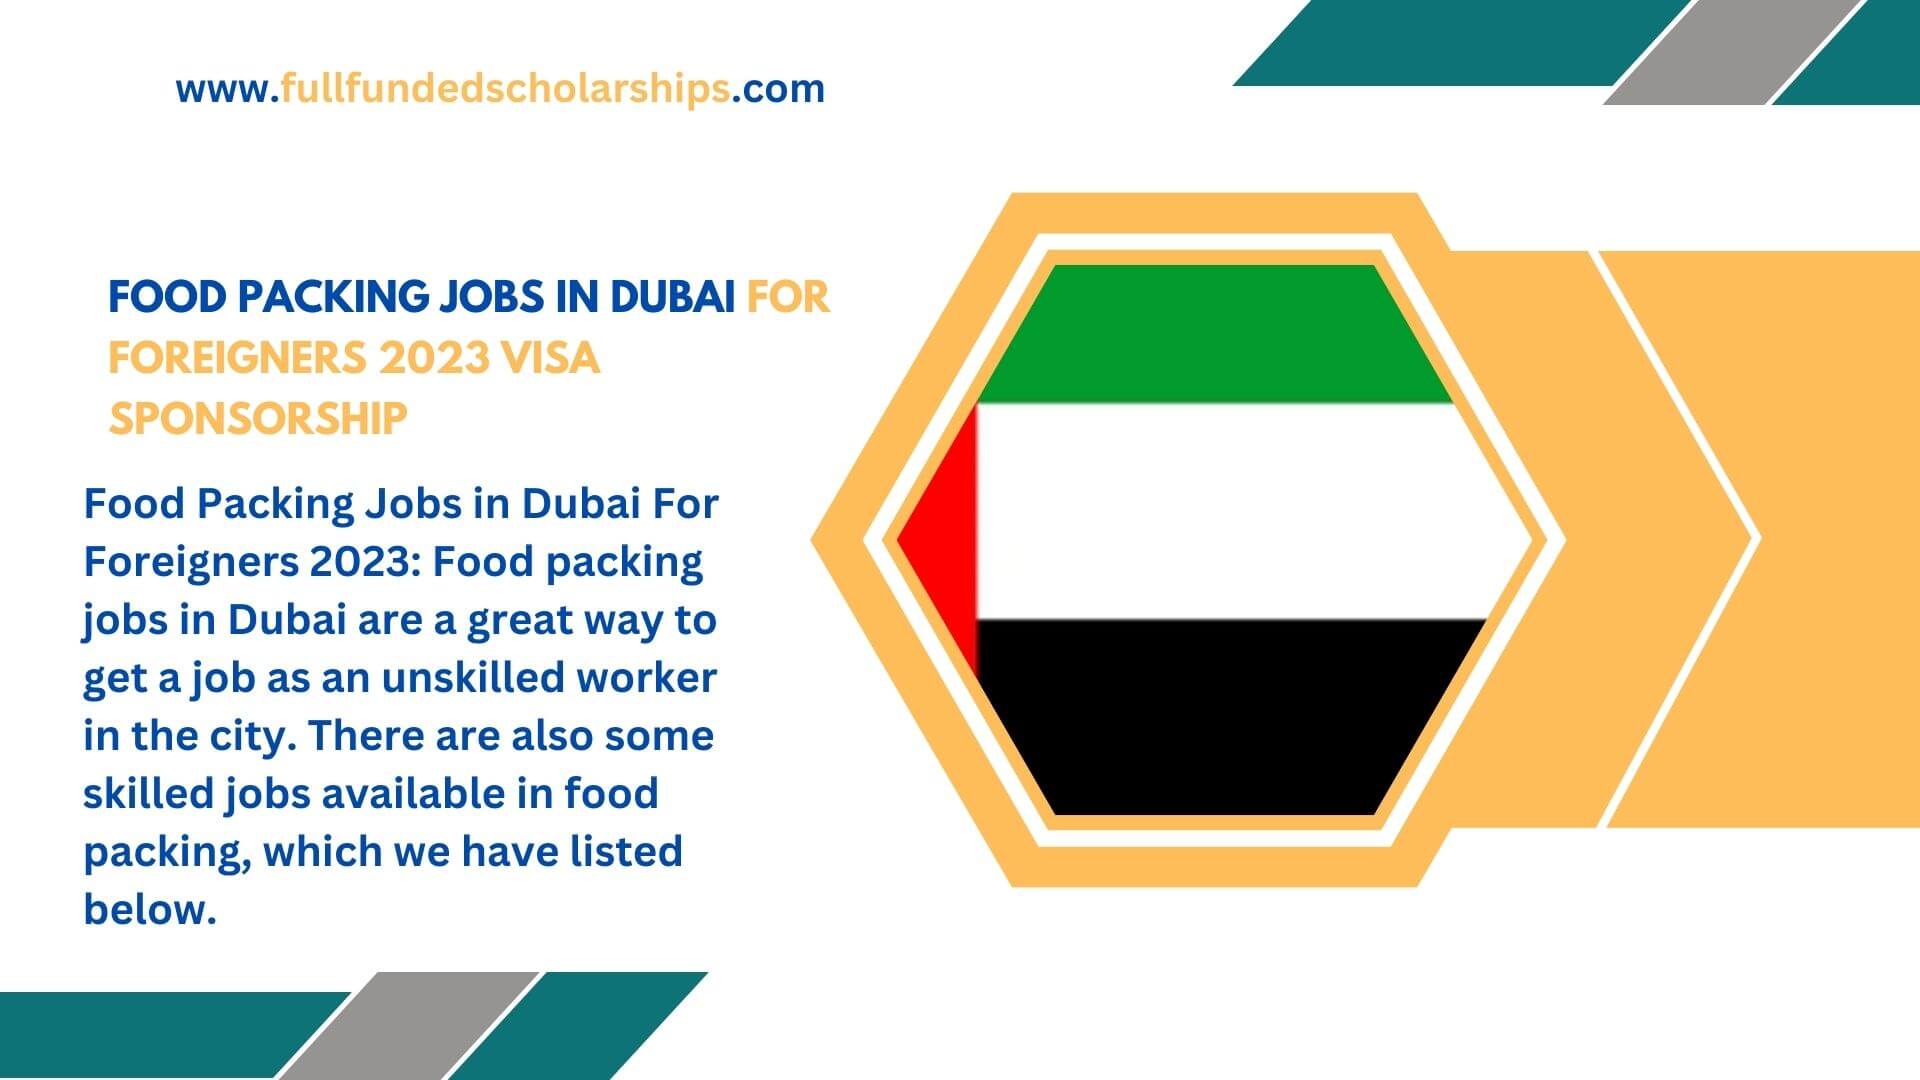 Food Packing Jobs in Dubai For Foreigners 2023 Visa Sponsorship